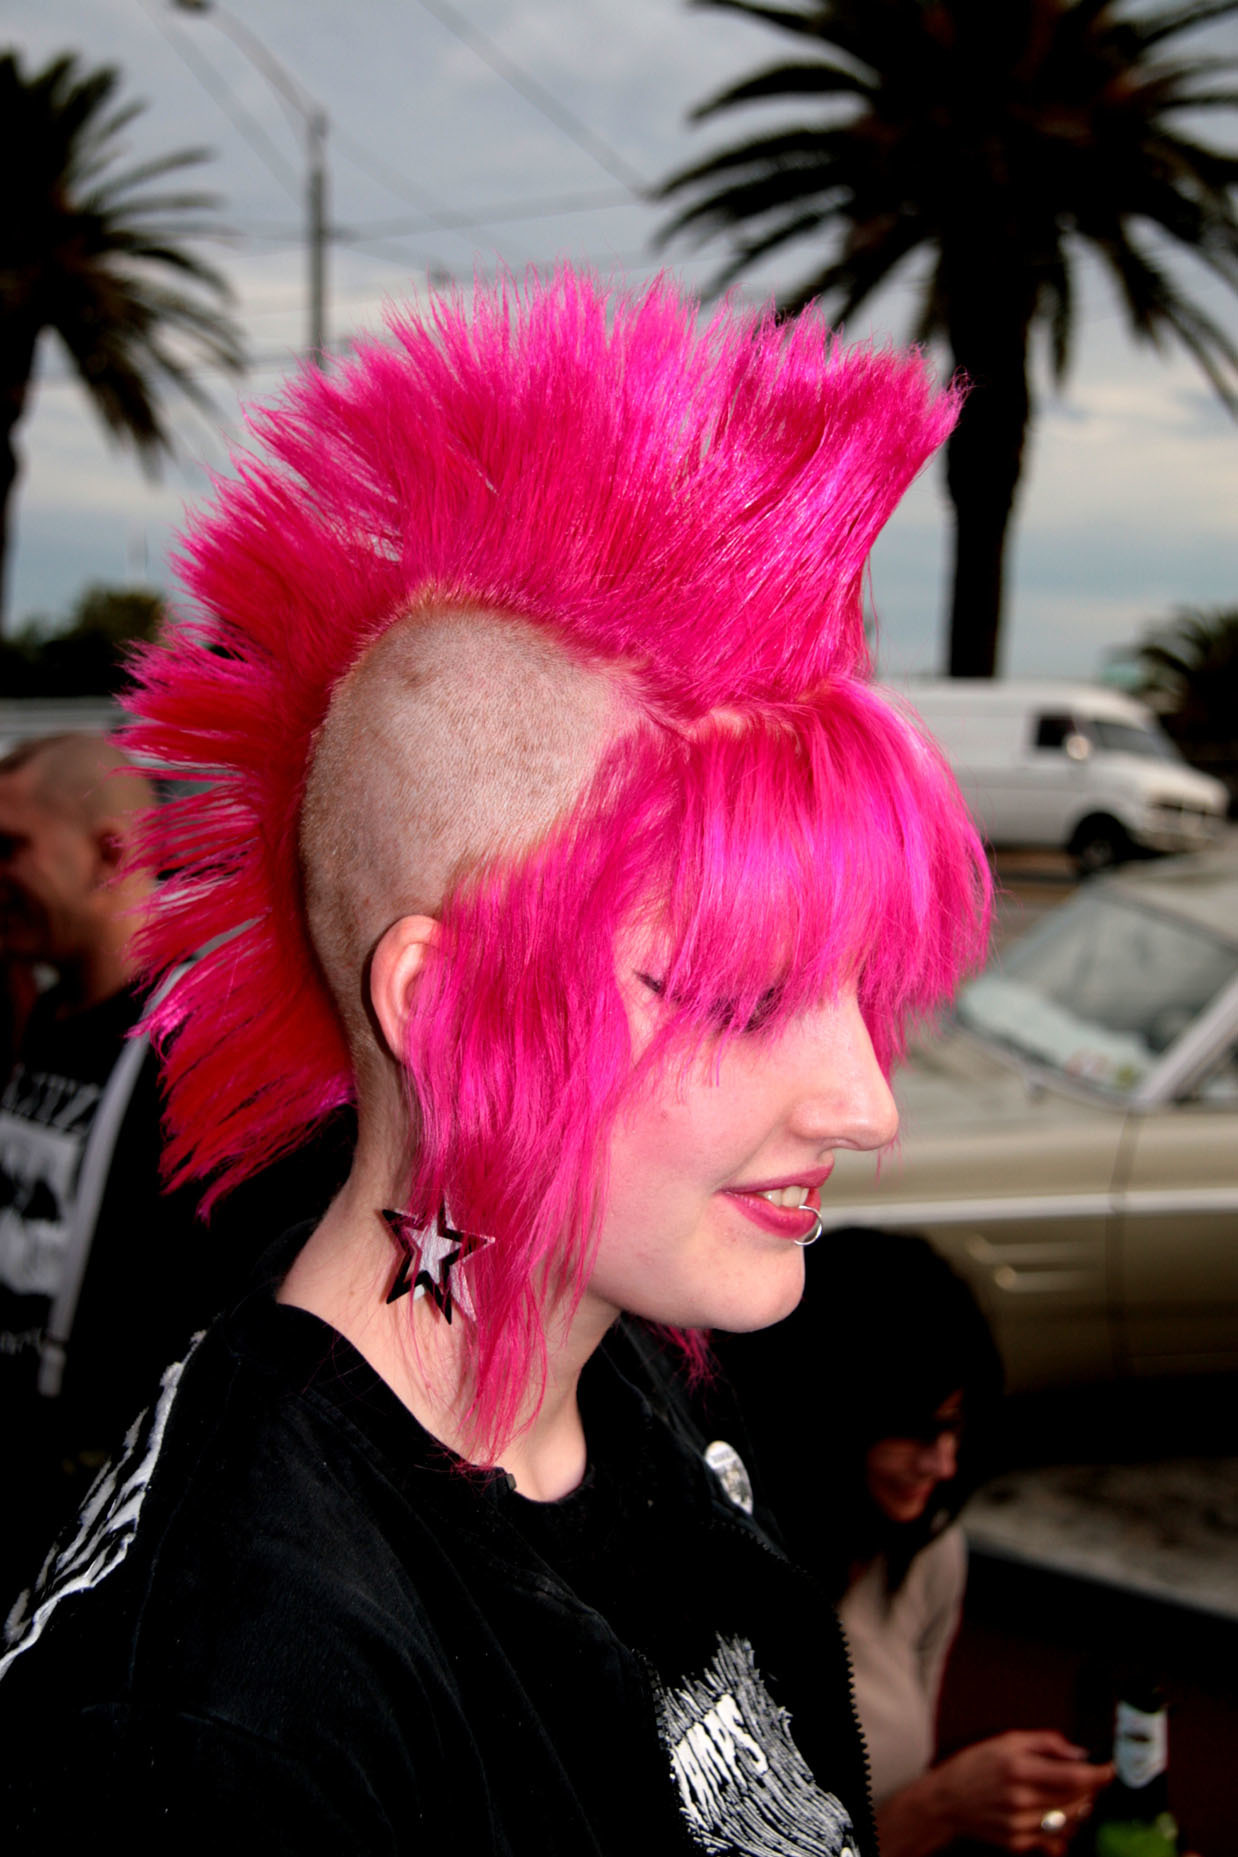 documenting the evolution of australia's punk scene - i-D